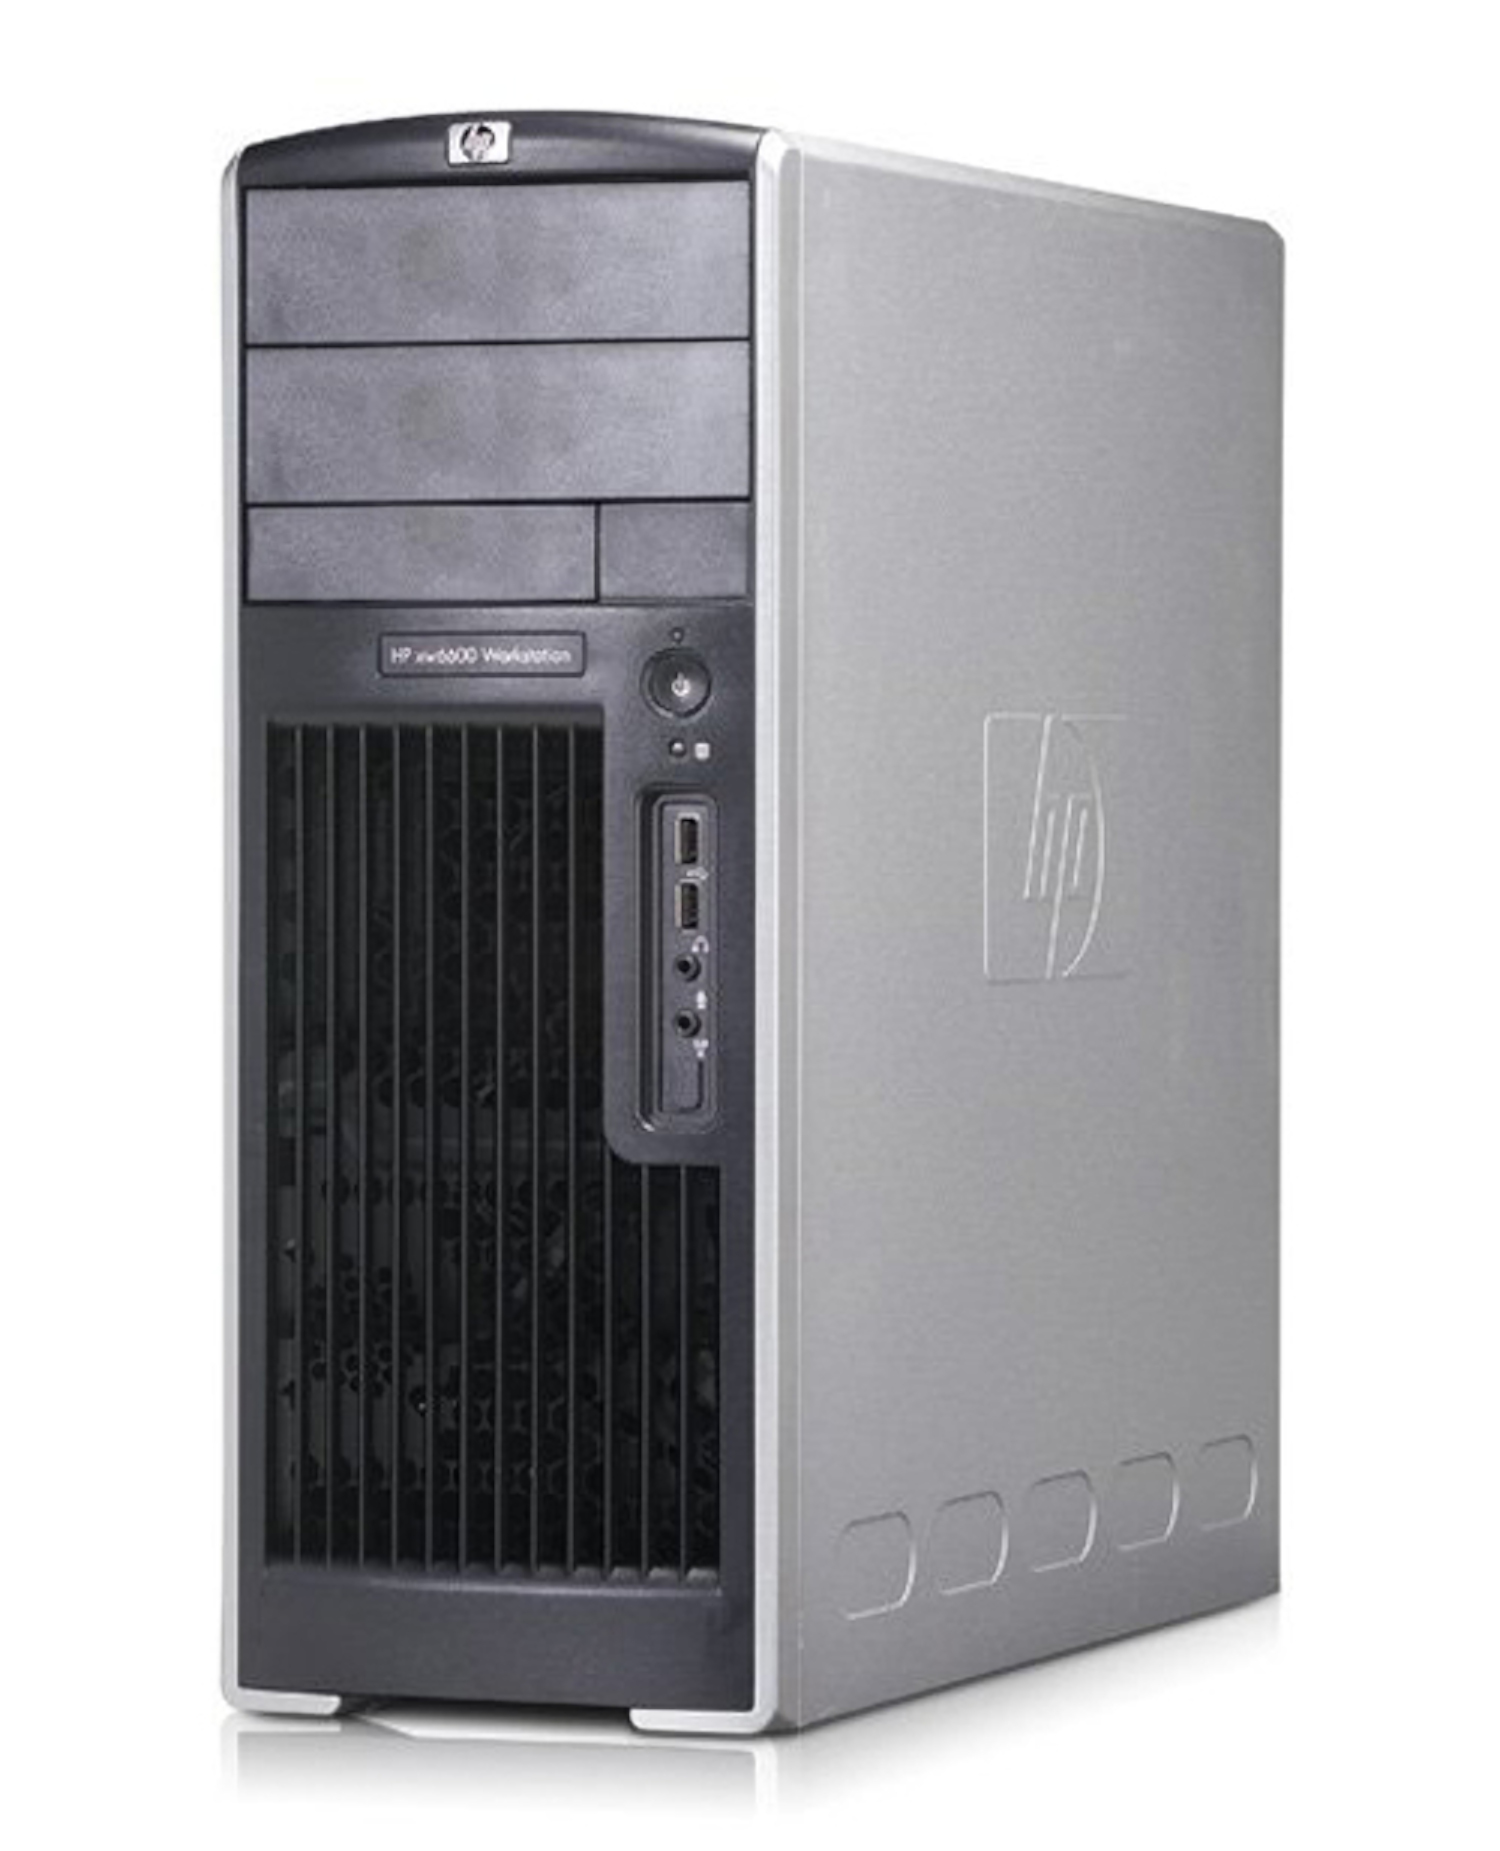 HP XW6600 Workstation Barebone Chassis Case 446337-002